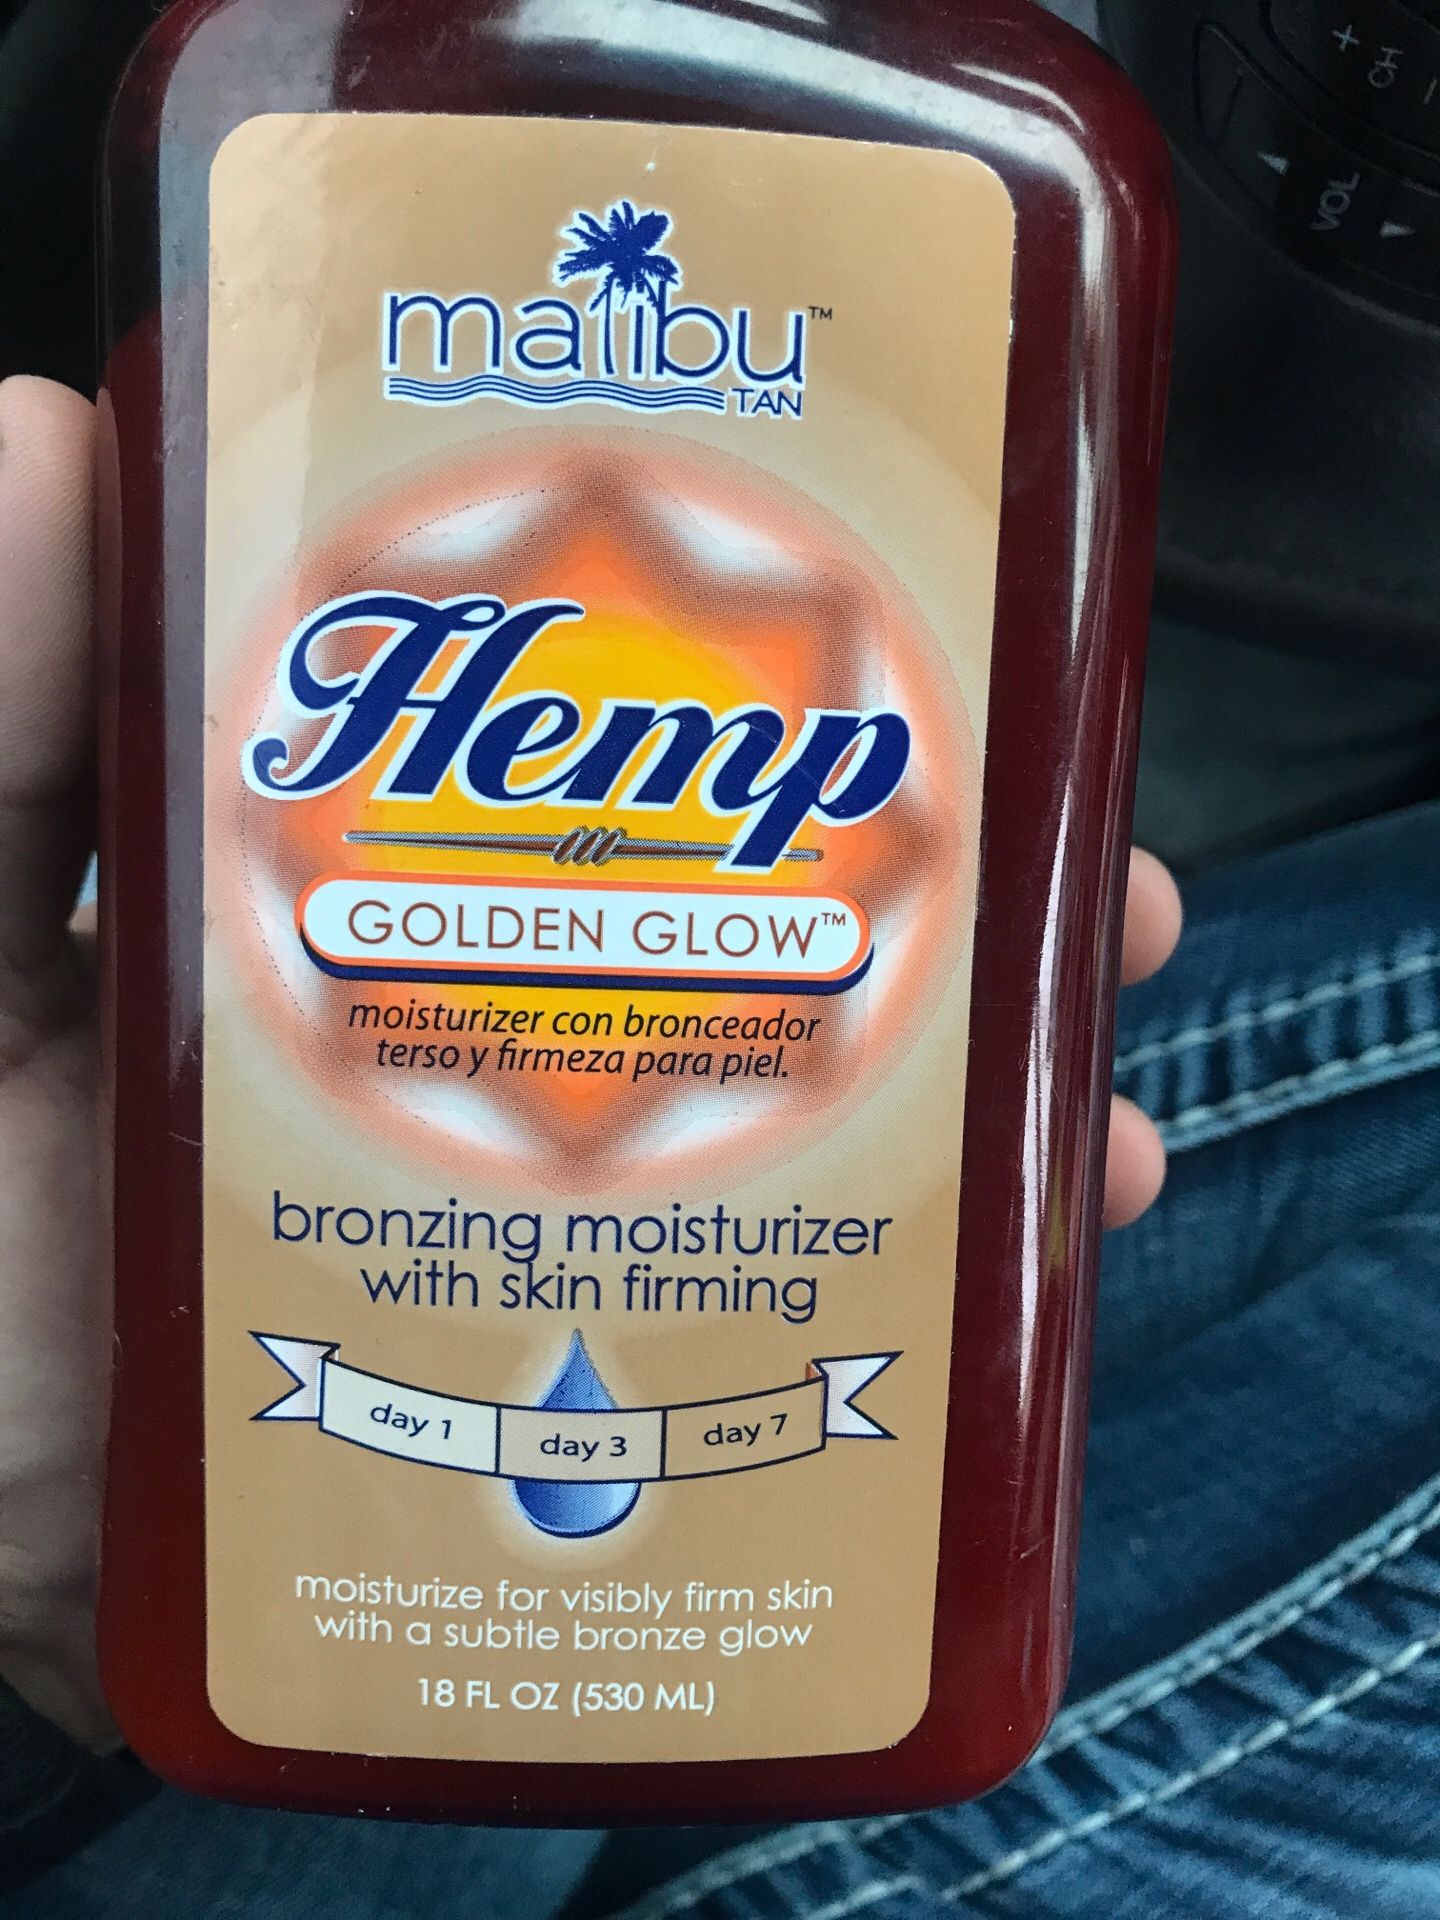 Malibu tan hemp bronzing moisturizer with skin firming